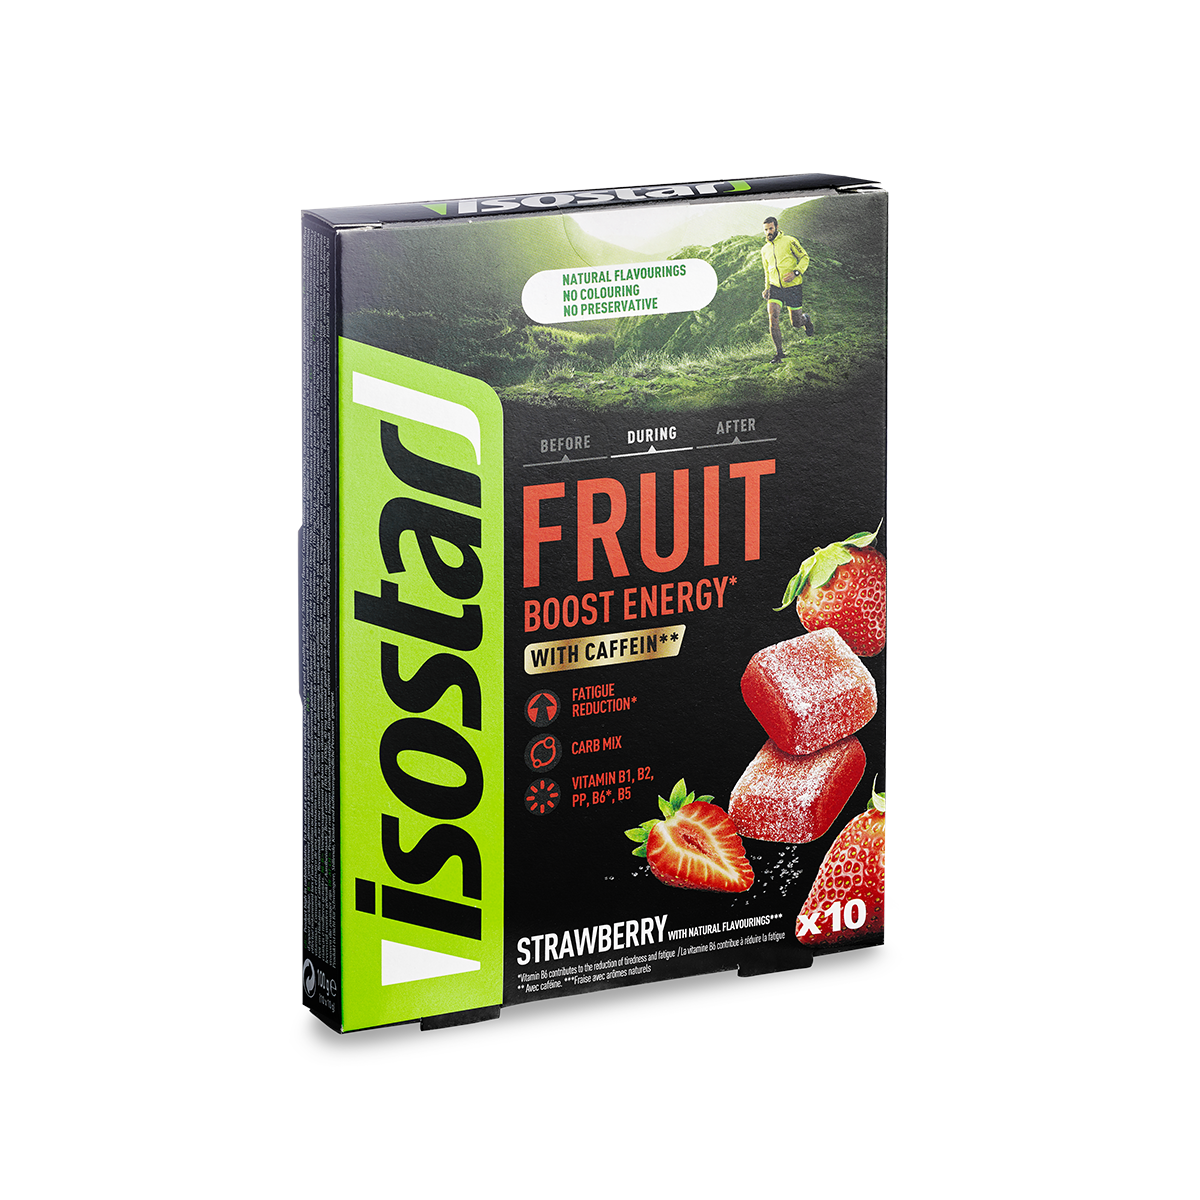  Isostar Energy Fruit Boost - snack énergétique